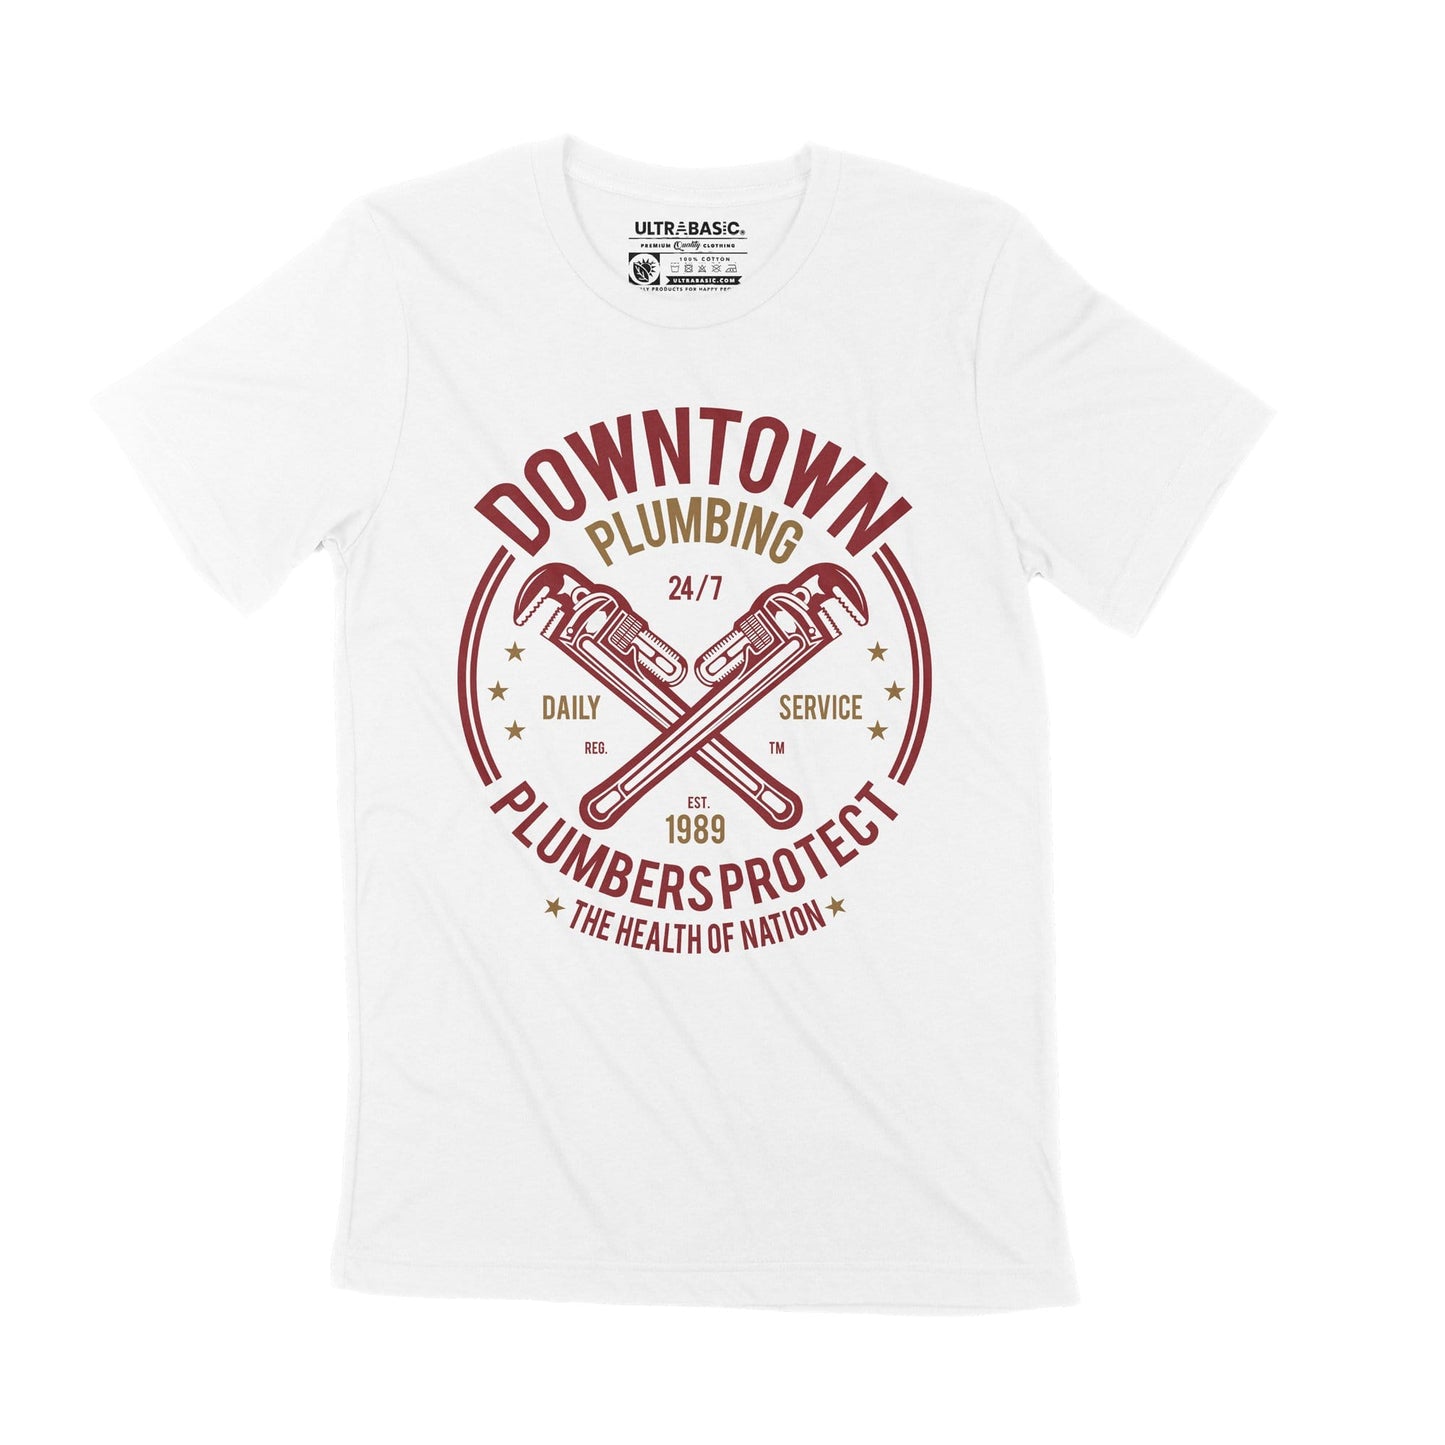 ULTRABASIC Herren-T-Shirt Downtown Plumbing – Klempner schützen seit 1989 – Gesundheit der Nation